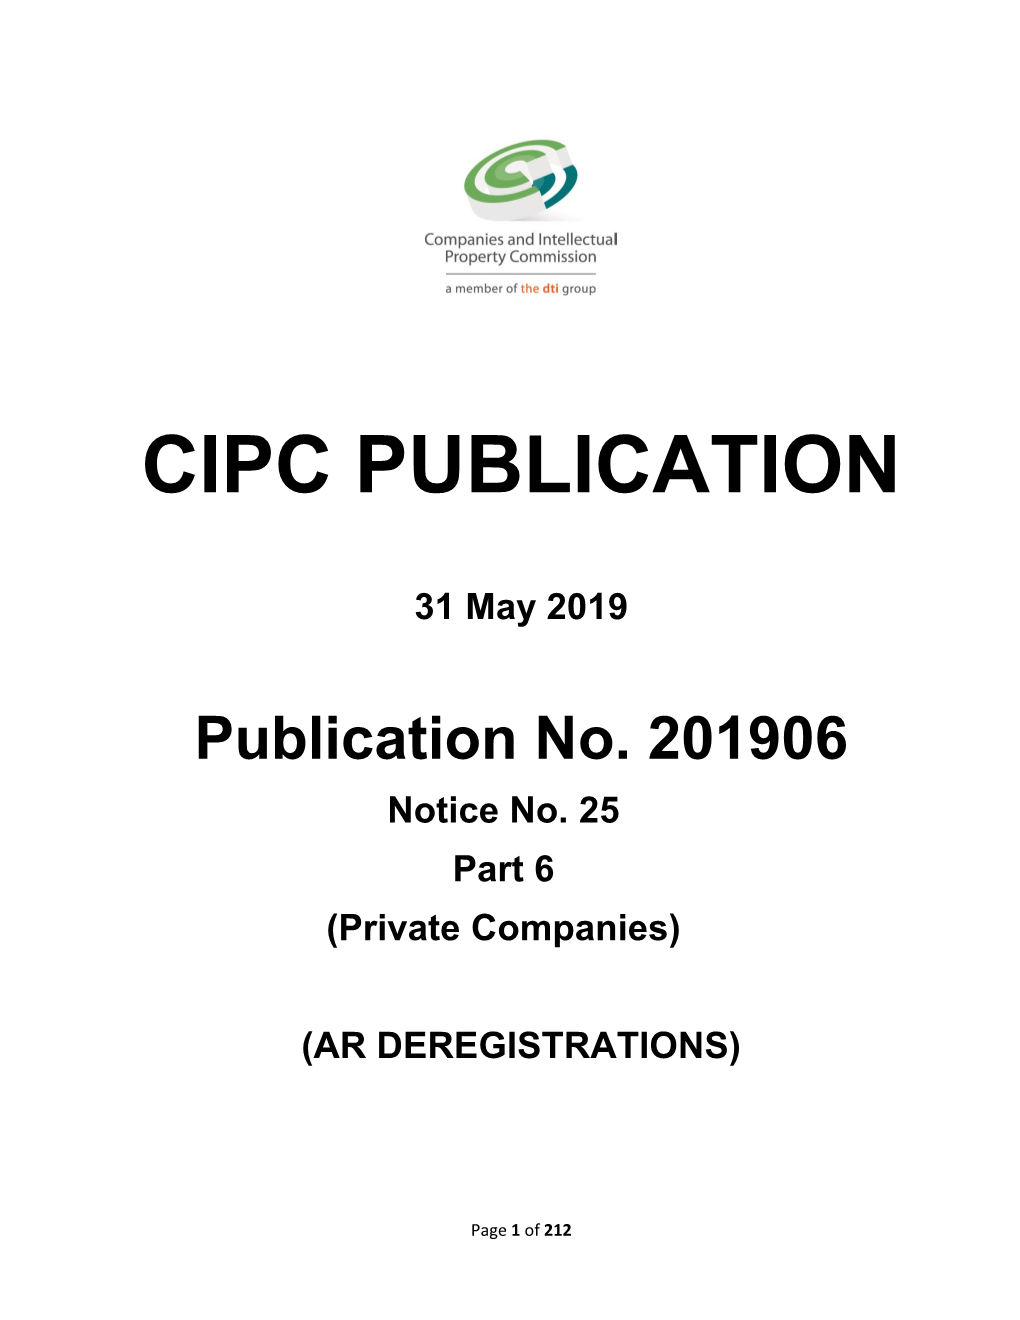 Publication No. 201906 Notice No. 25 Part 6 (Private Companies)